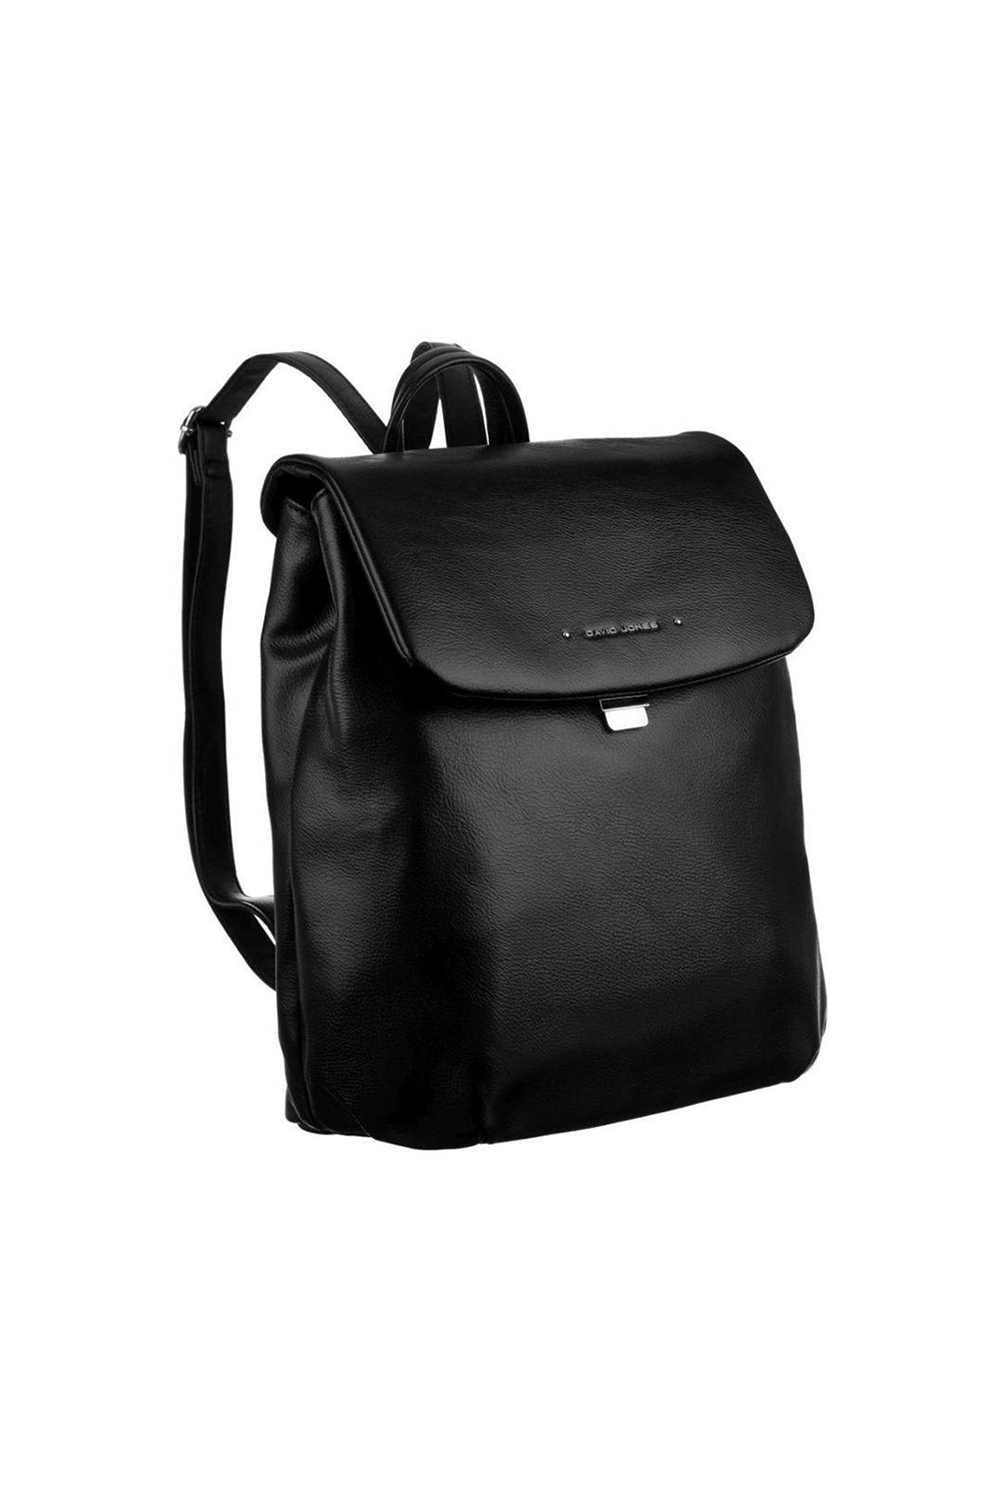 David Jones Backpack Bags & Handbags for Women